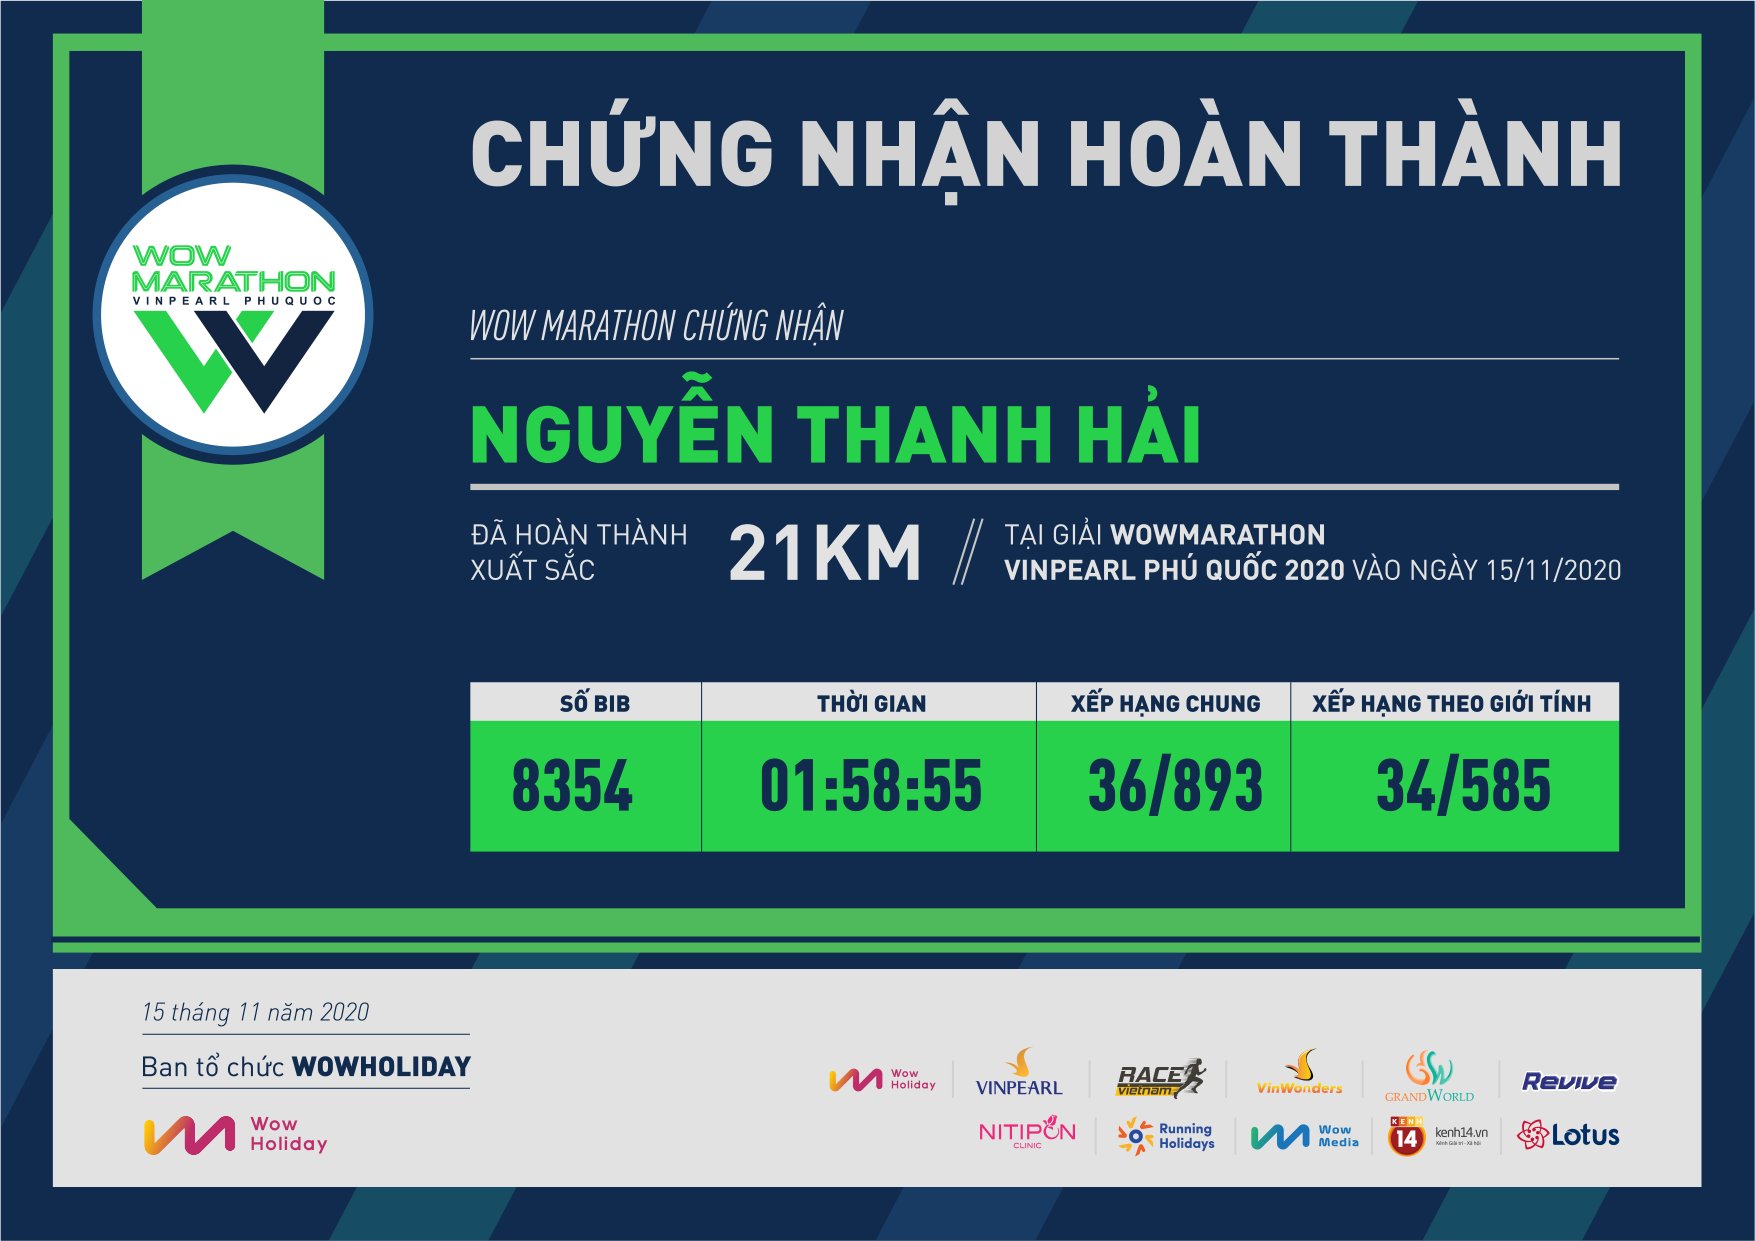 8354 - Nguyễn Thanh Hải